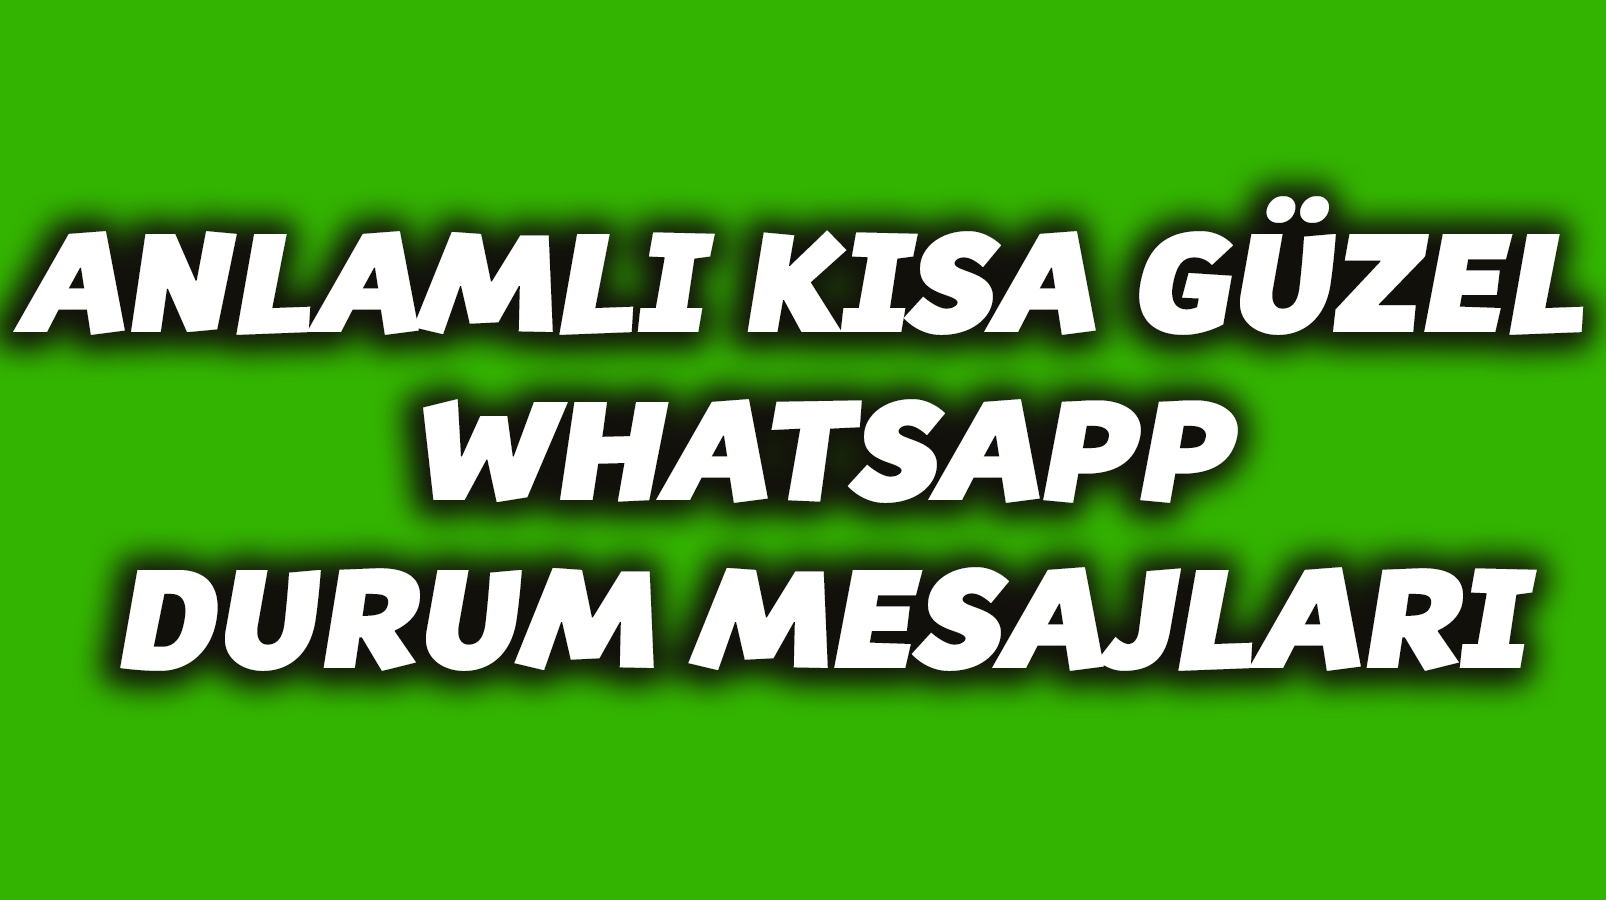 Whatsapp Durum Sozleri Guzel Anlamli Kisa Whatsapp Durum Mesajlari Yeni Safak